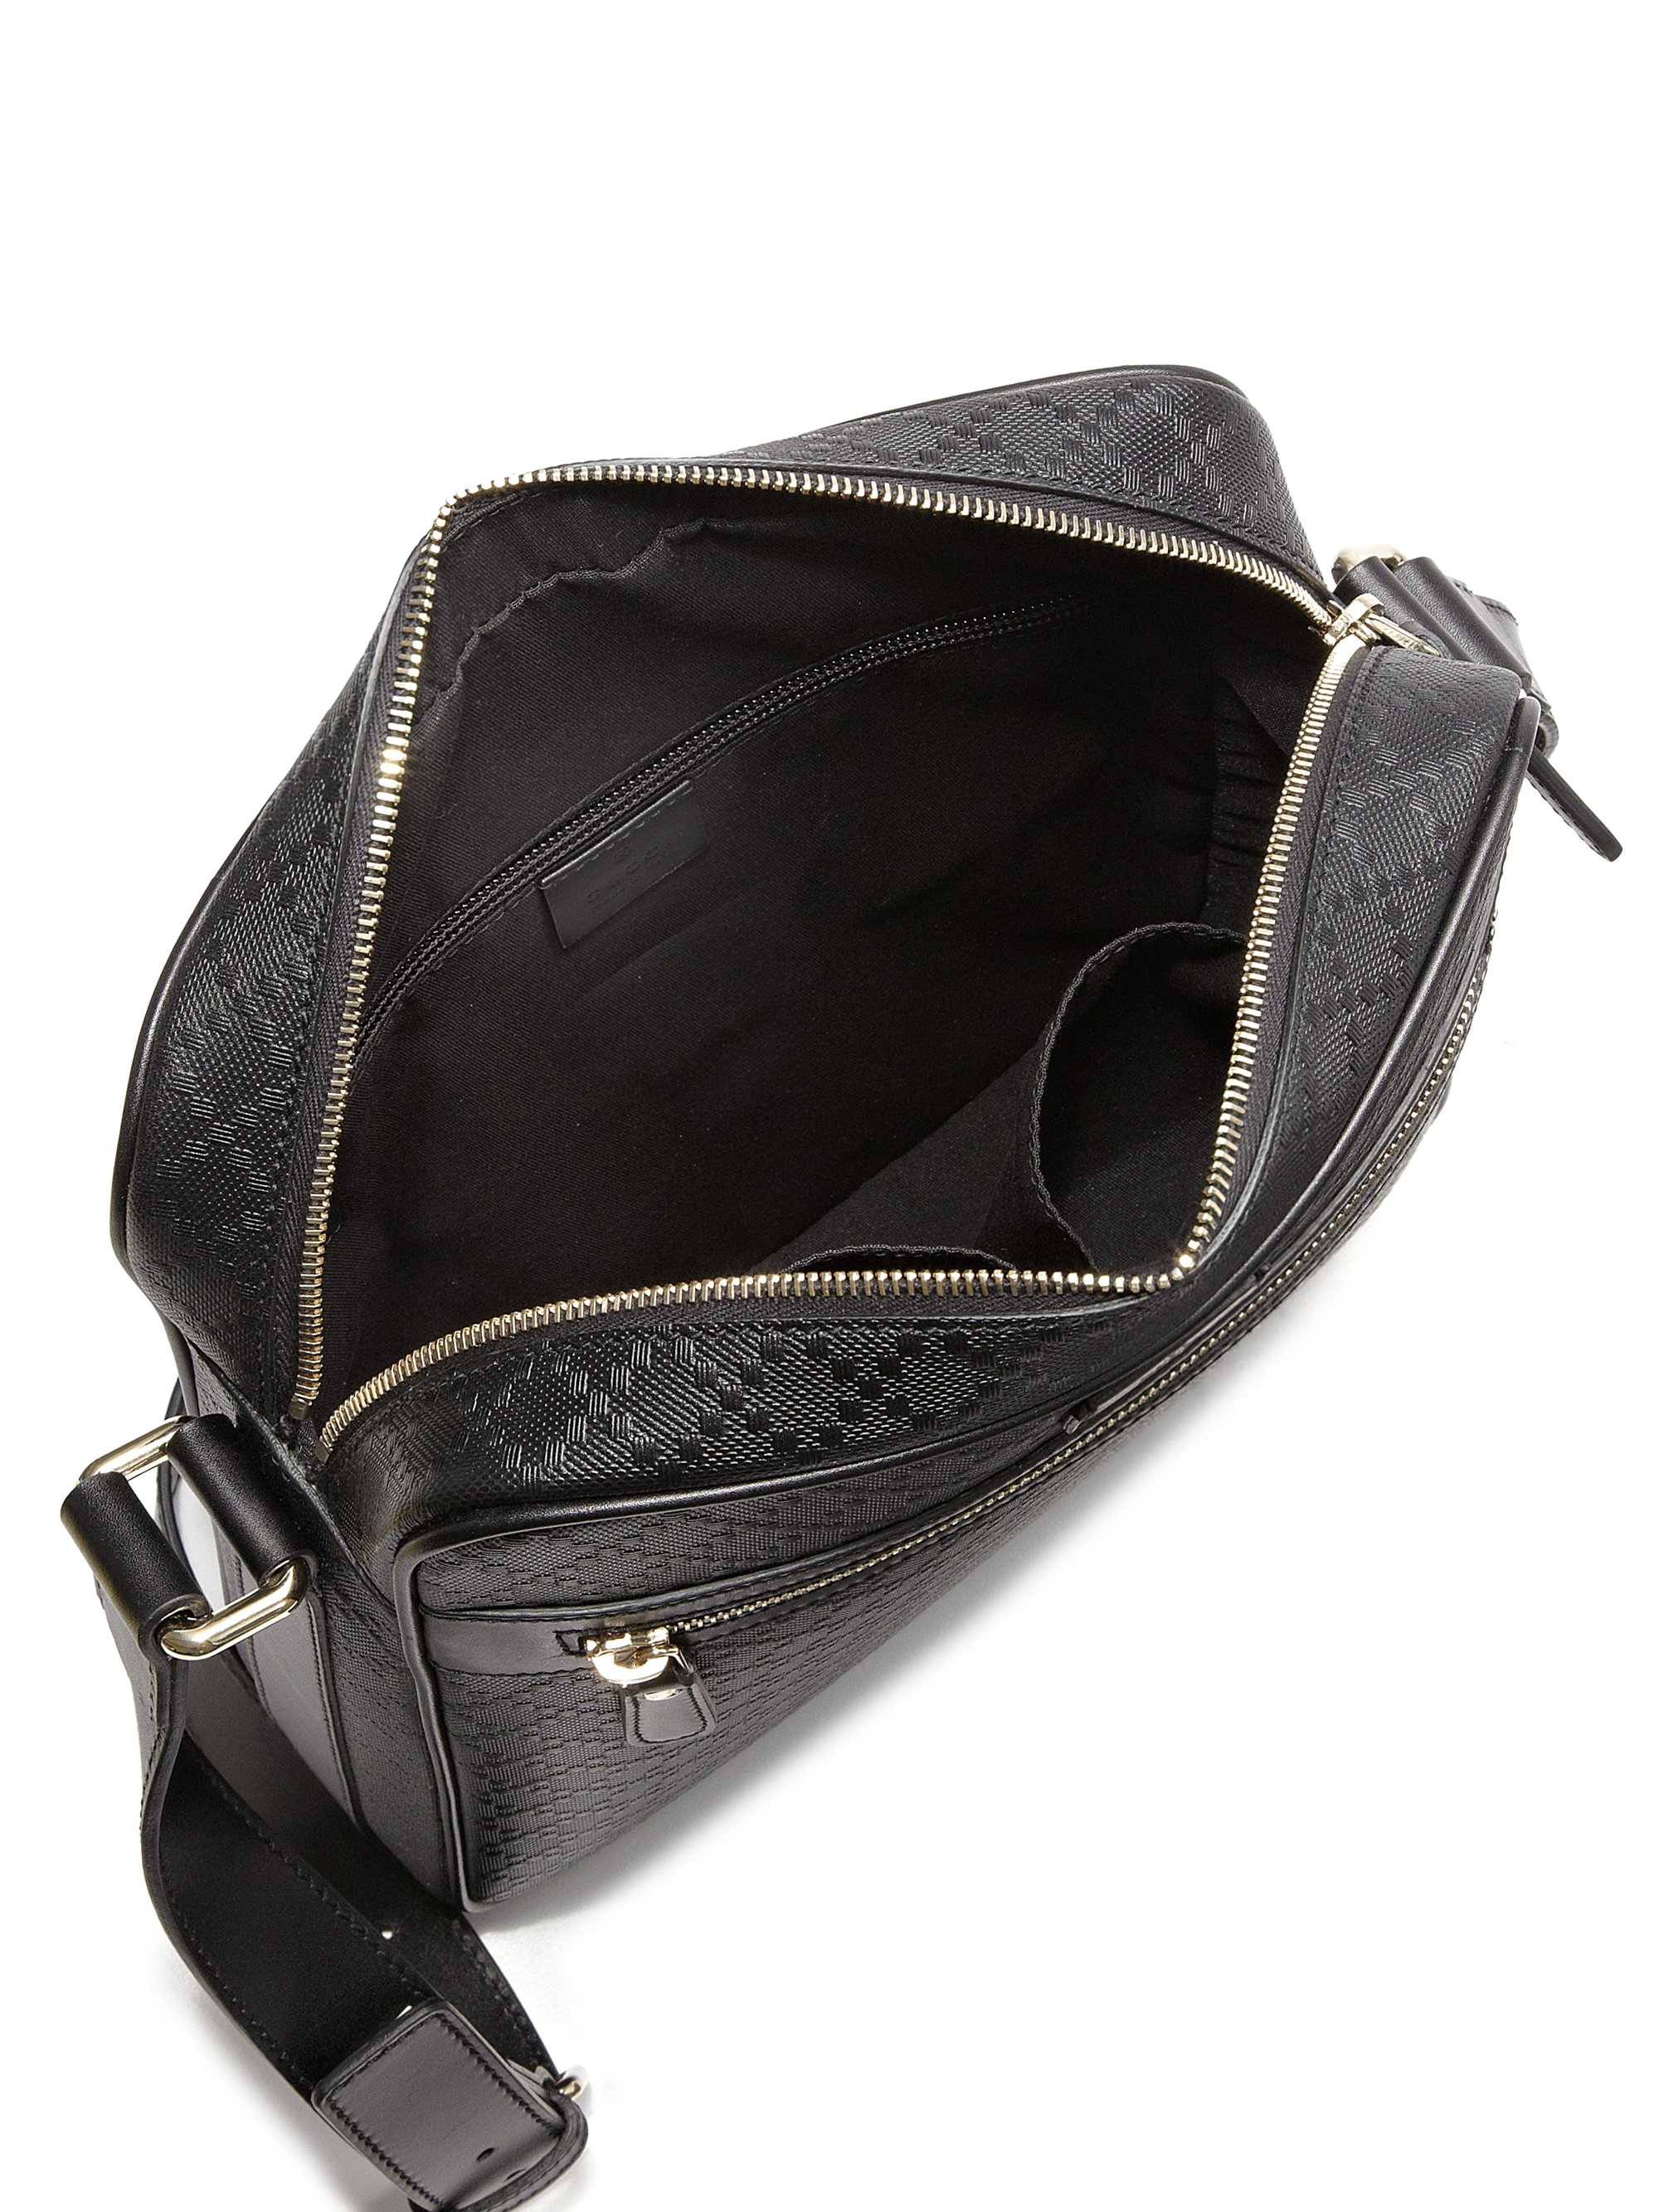 Lyst - Gucci Bright Diamante Leather Shoulder Bag in Black for Men